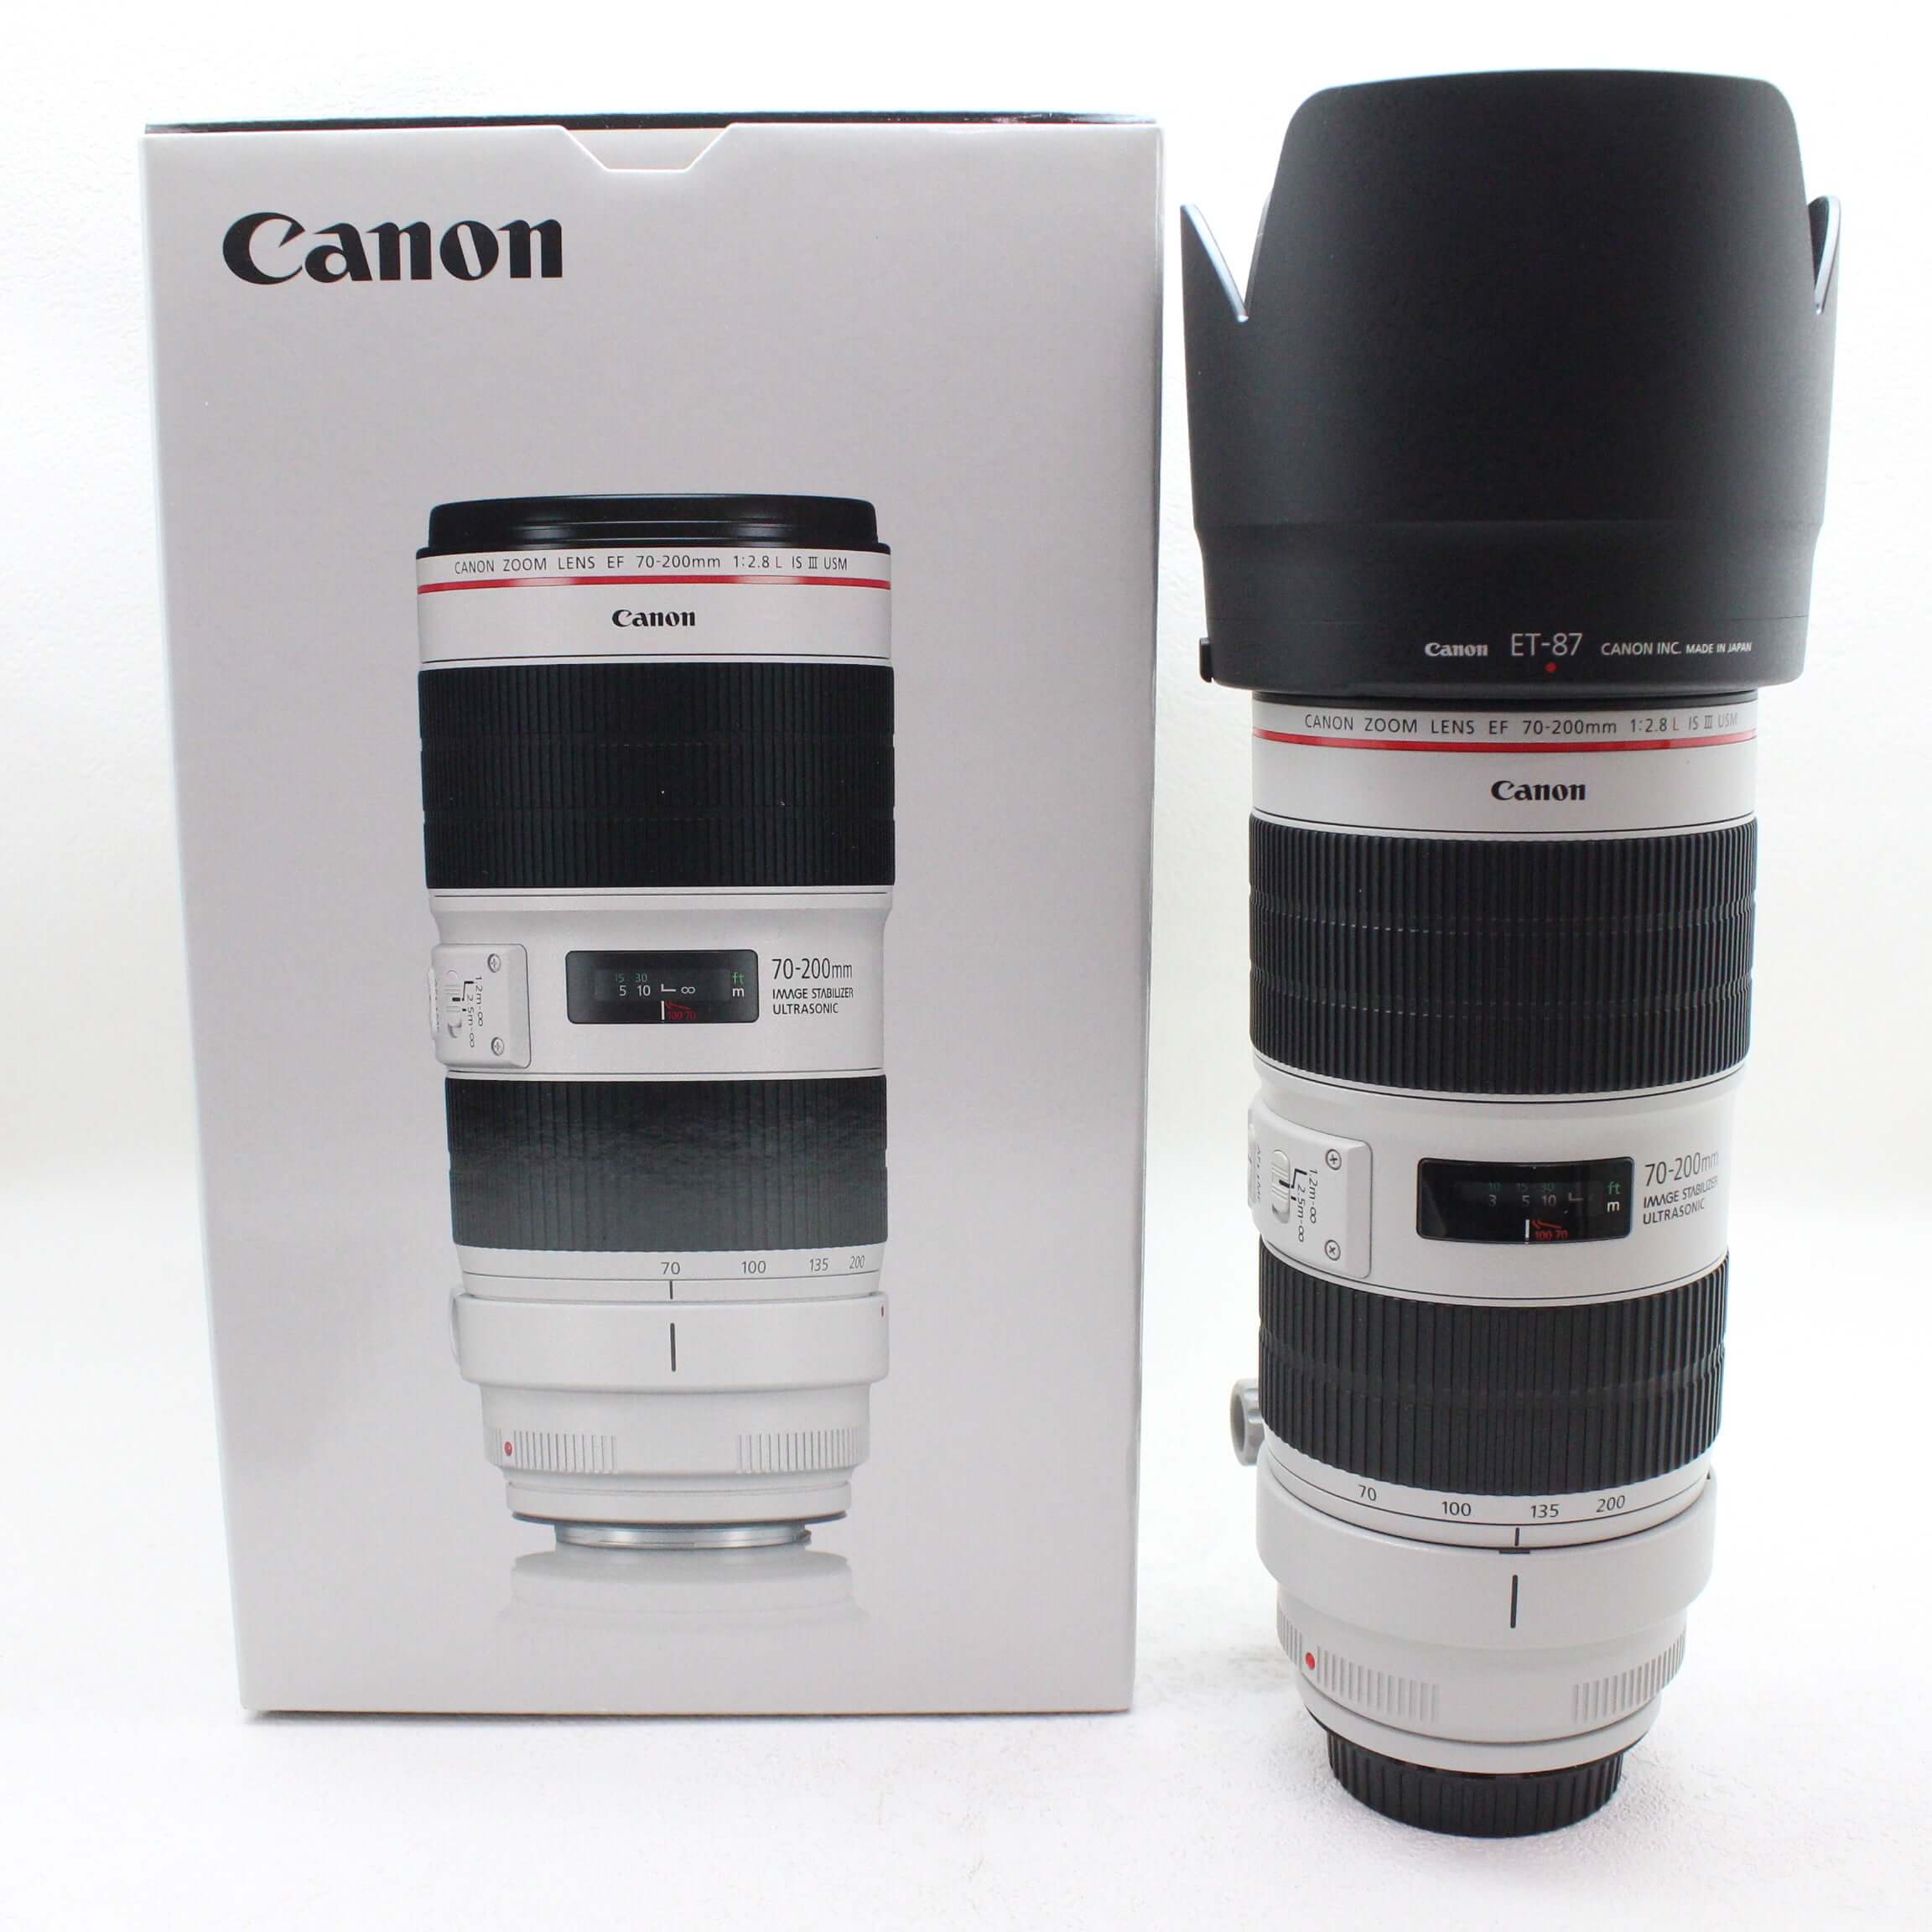 中古品 Canon EF70-200mm F2.8L IS III USM【2月10日(土) youtube生 